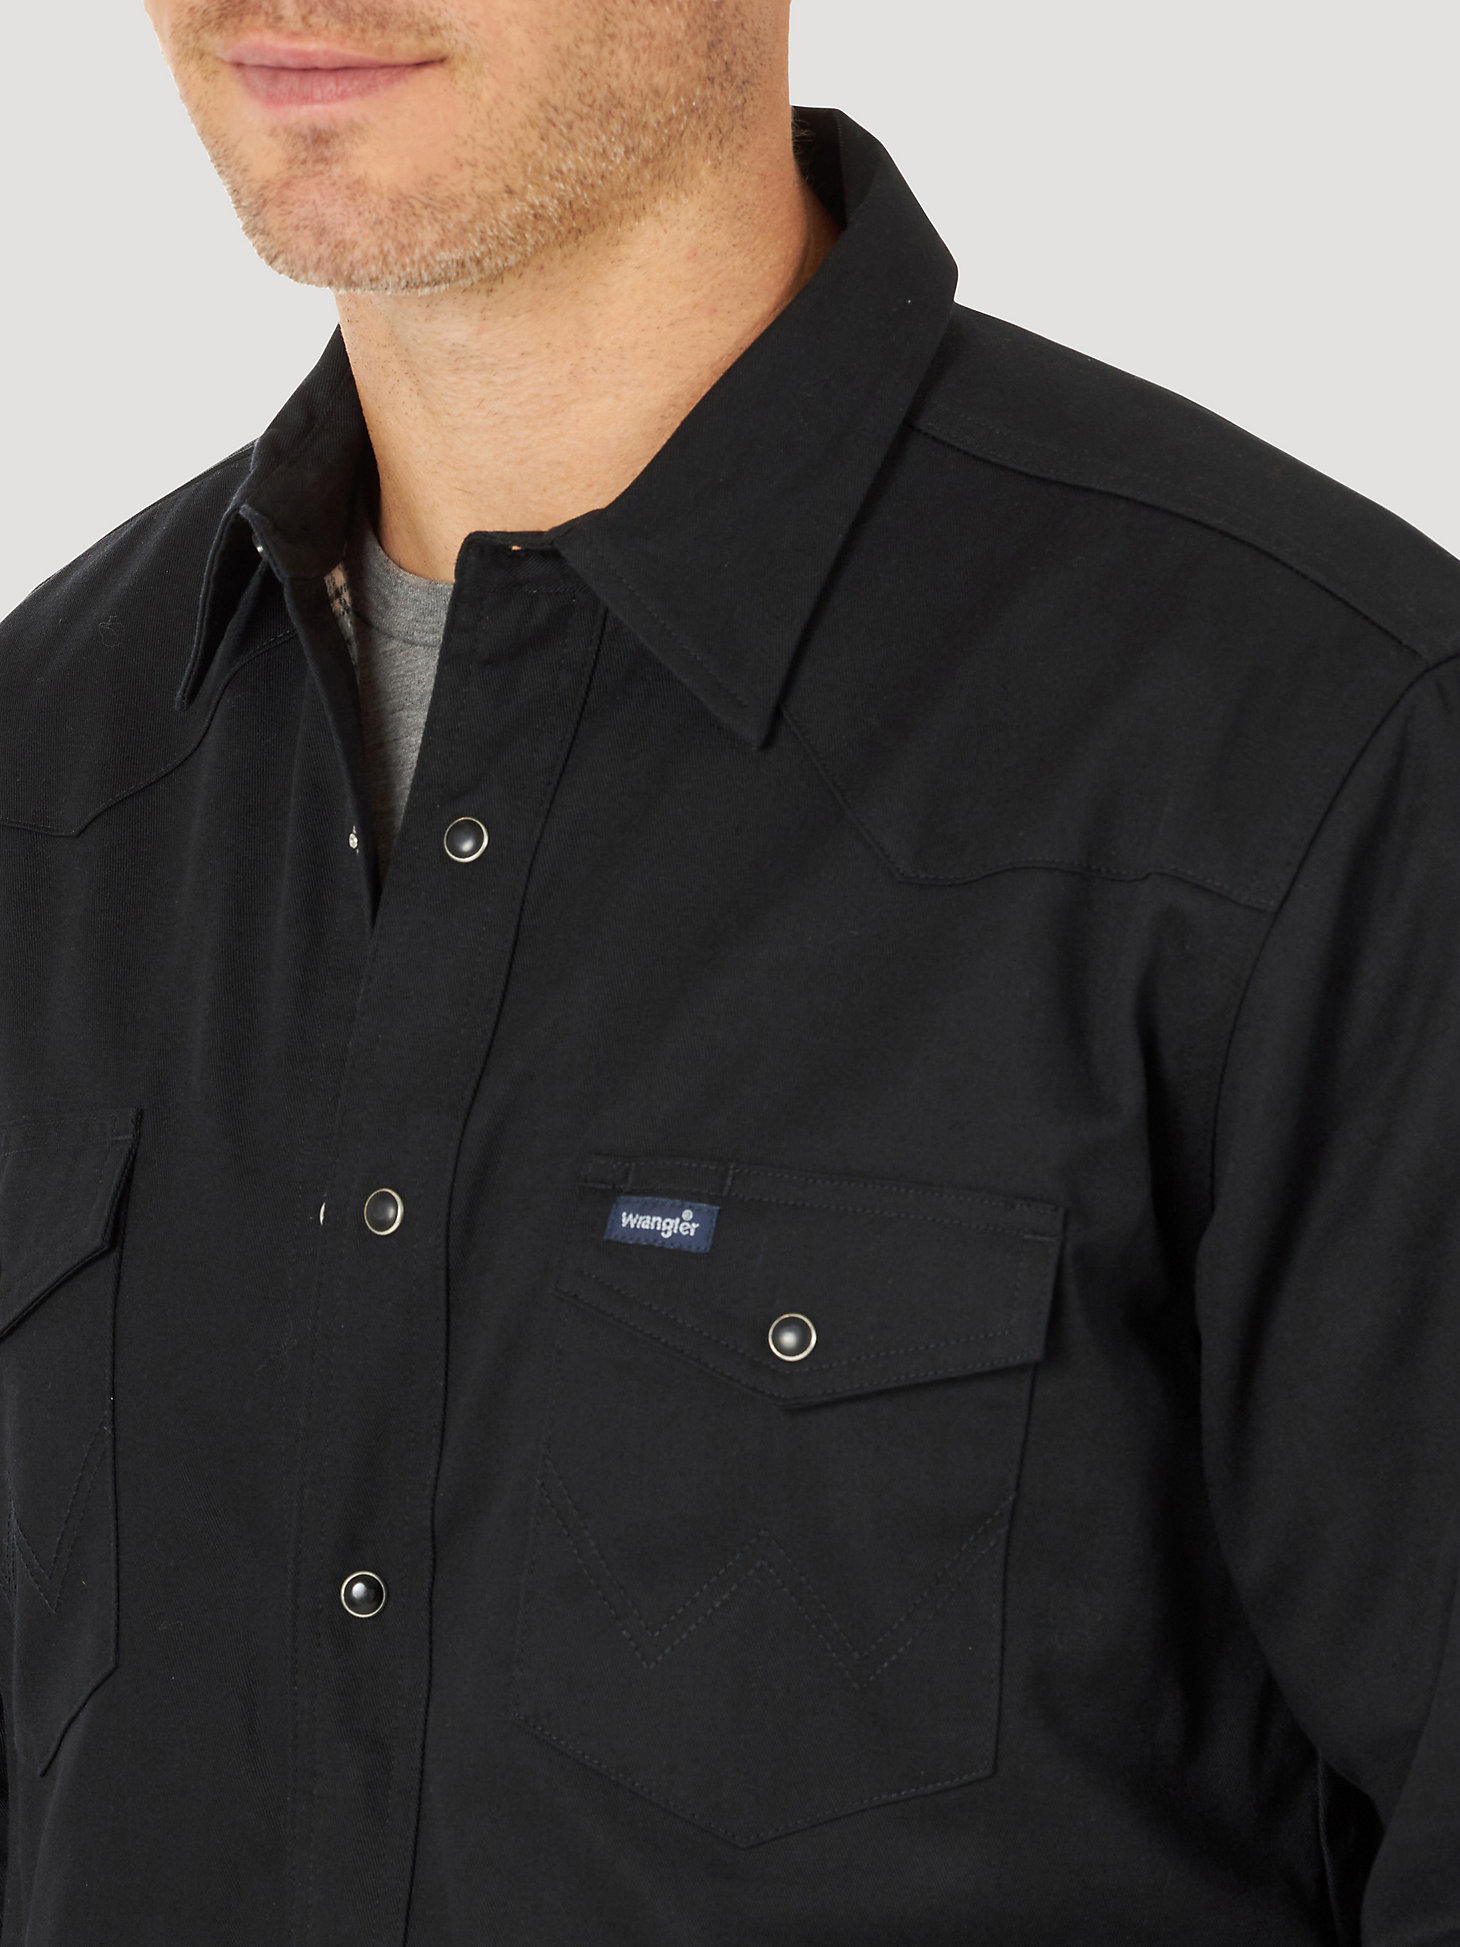 Men's Wrangler® Long Sleeve Flannel Lined Solid Work Shirt in Black/Burgundy alternative view 5